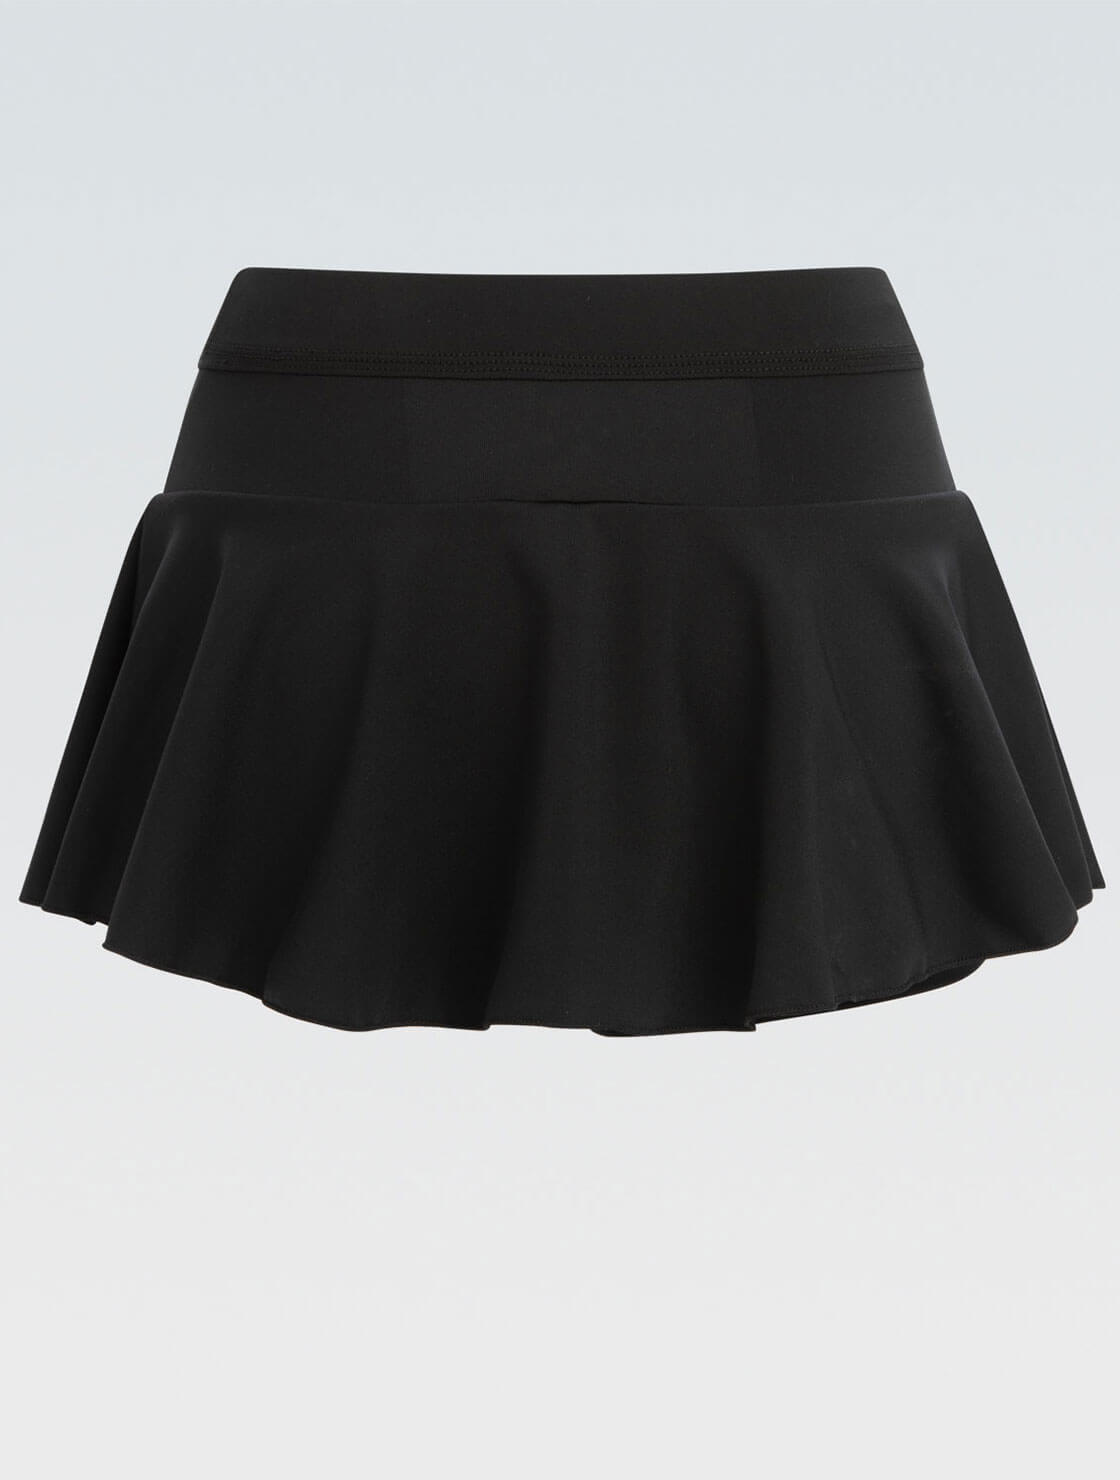 GK Pleated Athletic Skirt - Practice Wear